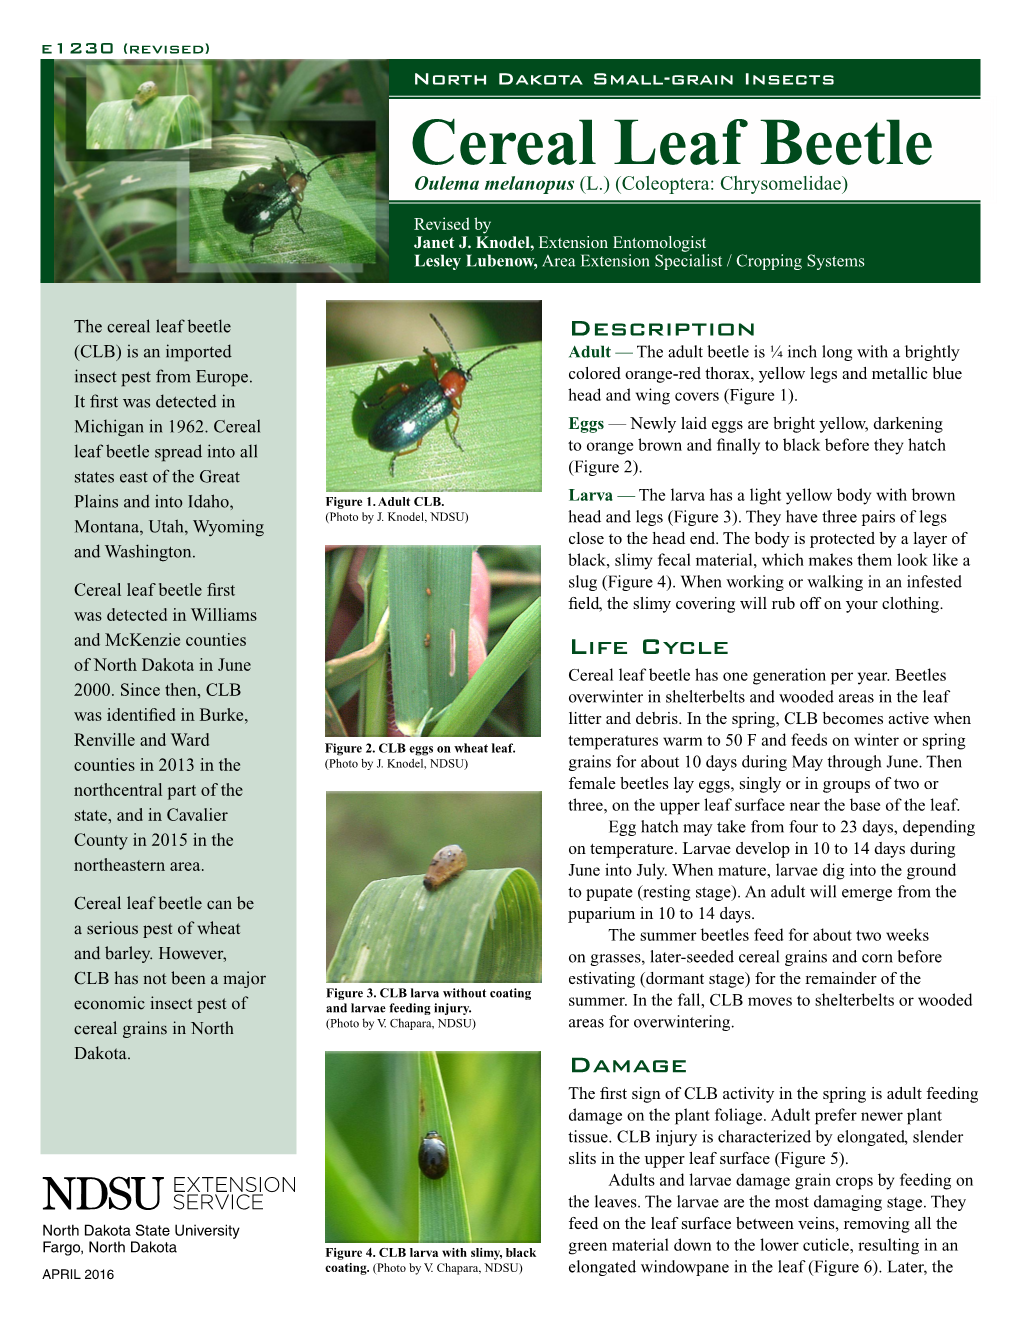 Cereal Leaf Beetle, Oulema Melanopus